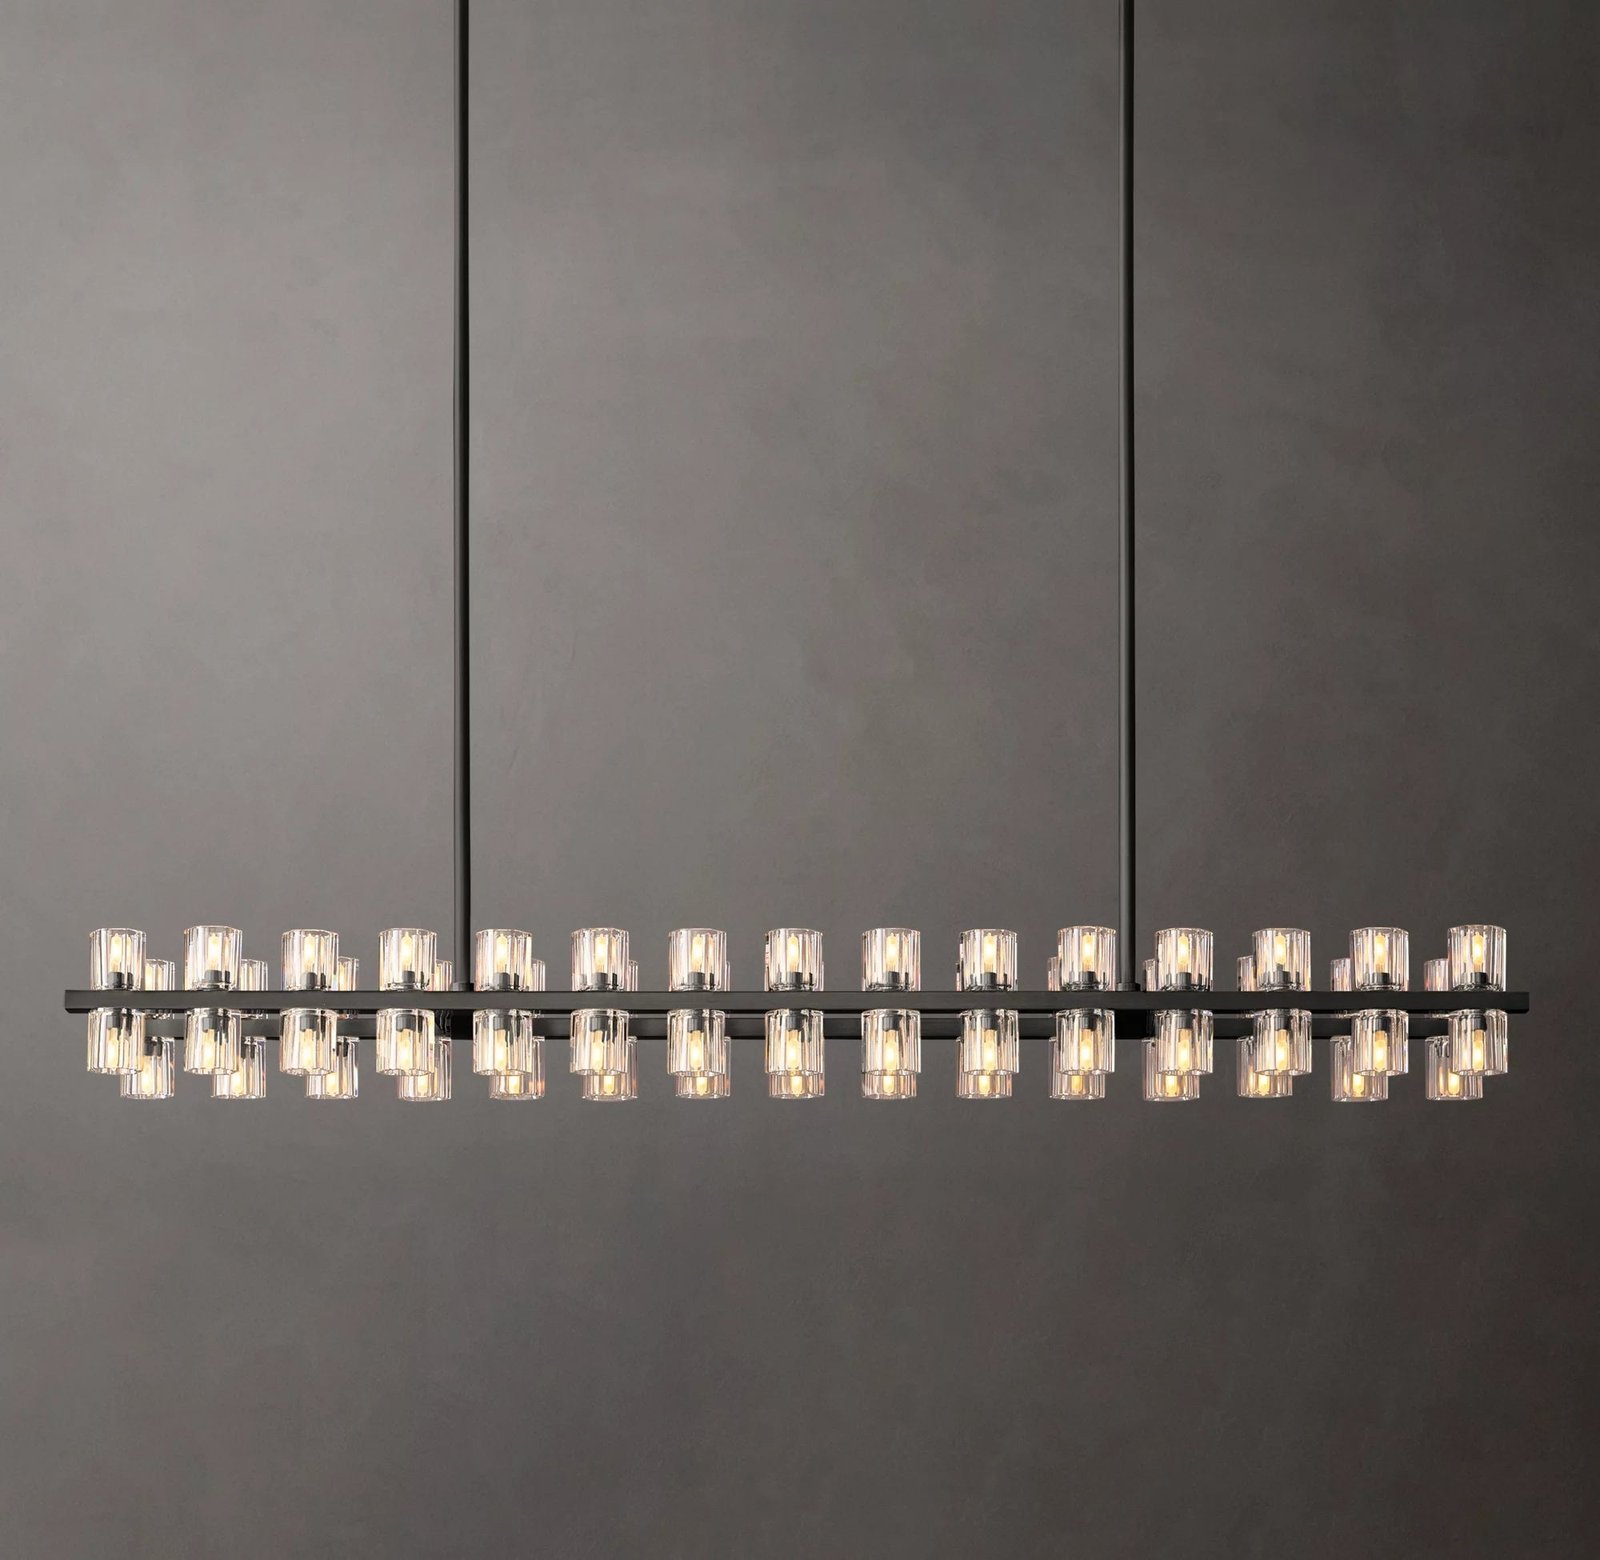 Black Arcachon LED Rectangular Chandelier with 60 bulbs, measuring L 55″ x H 8.6″ (L 140cm x H 22cm)